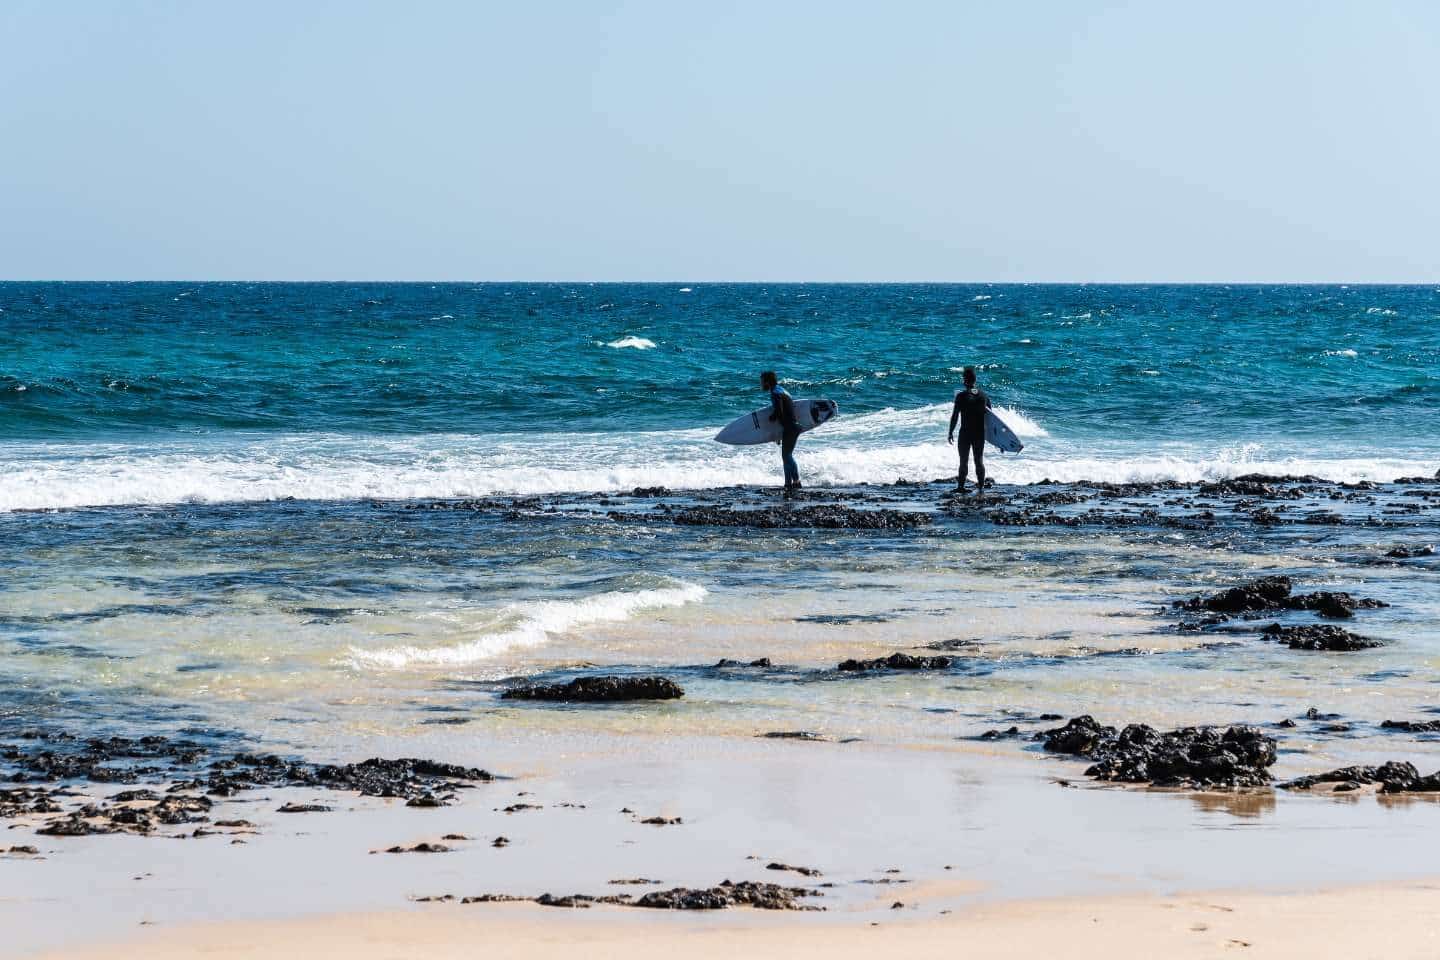 Two surfers on the beach in Corralejo